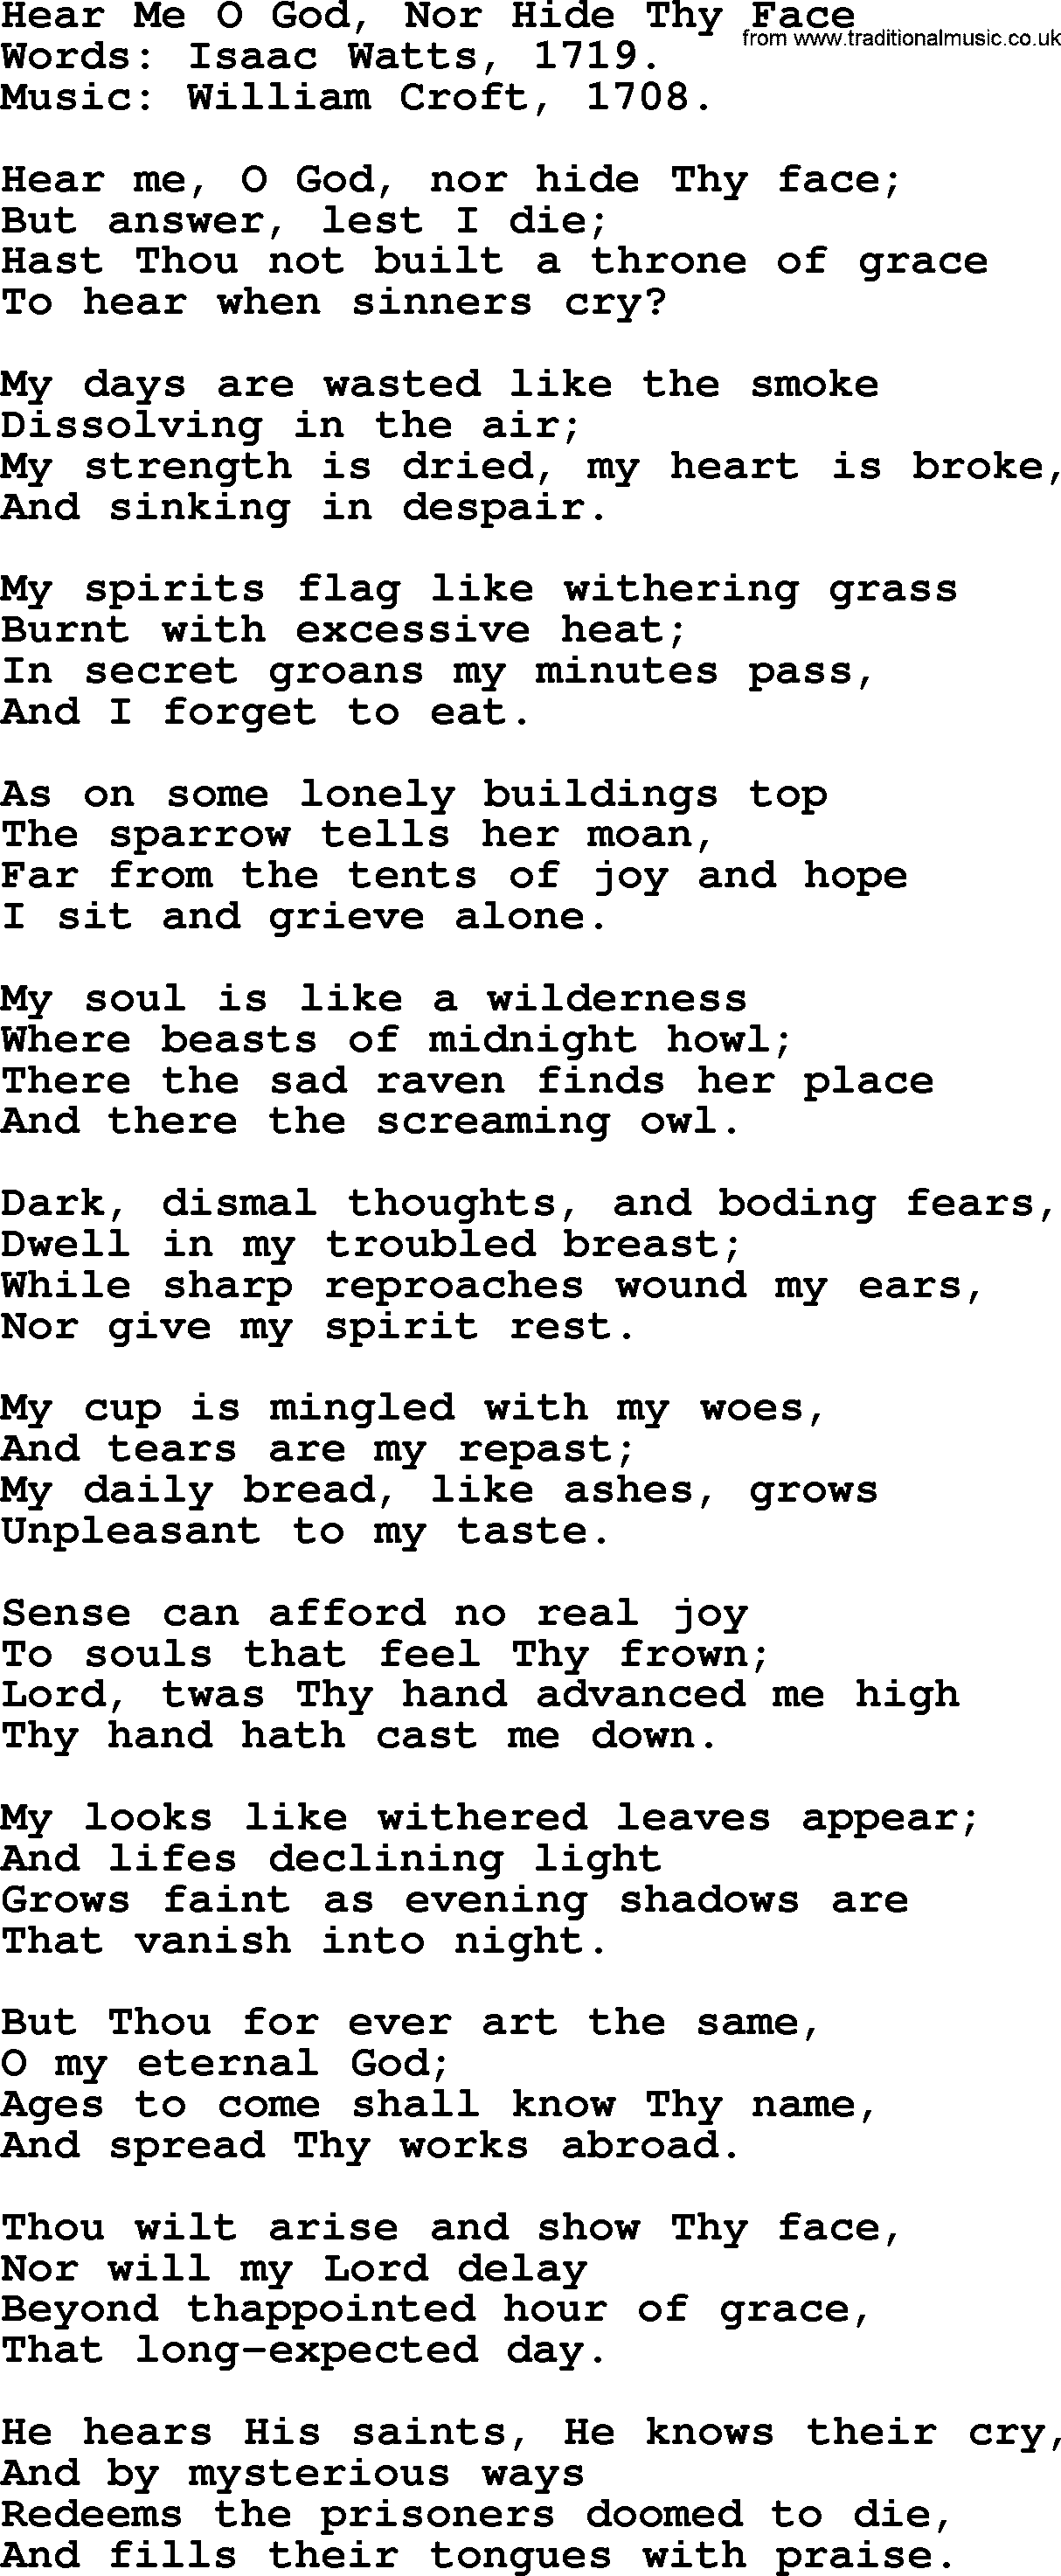 Isaac Watts Christian hymn: Hear Me O God, Nor Hide Thy Face- lyricss